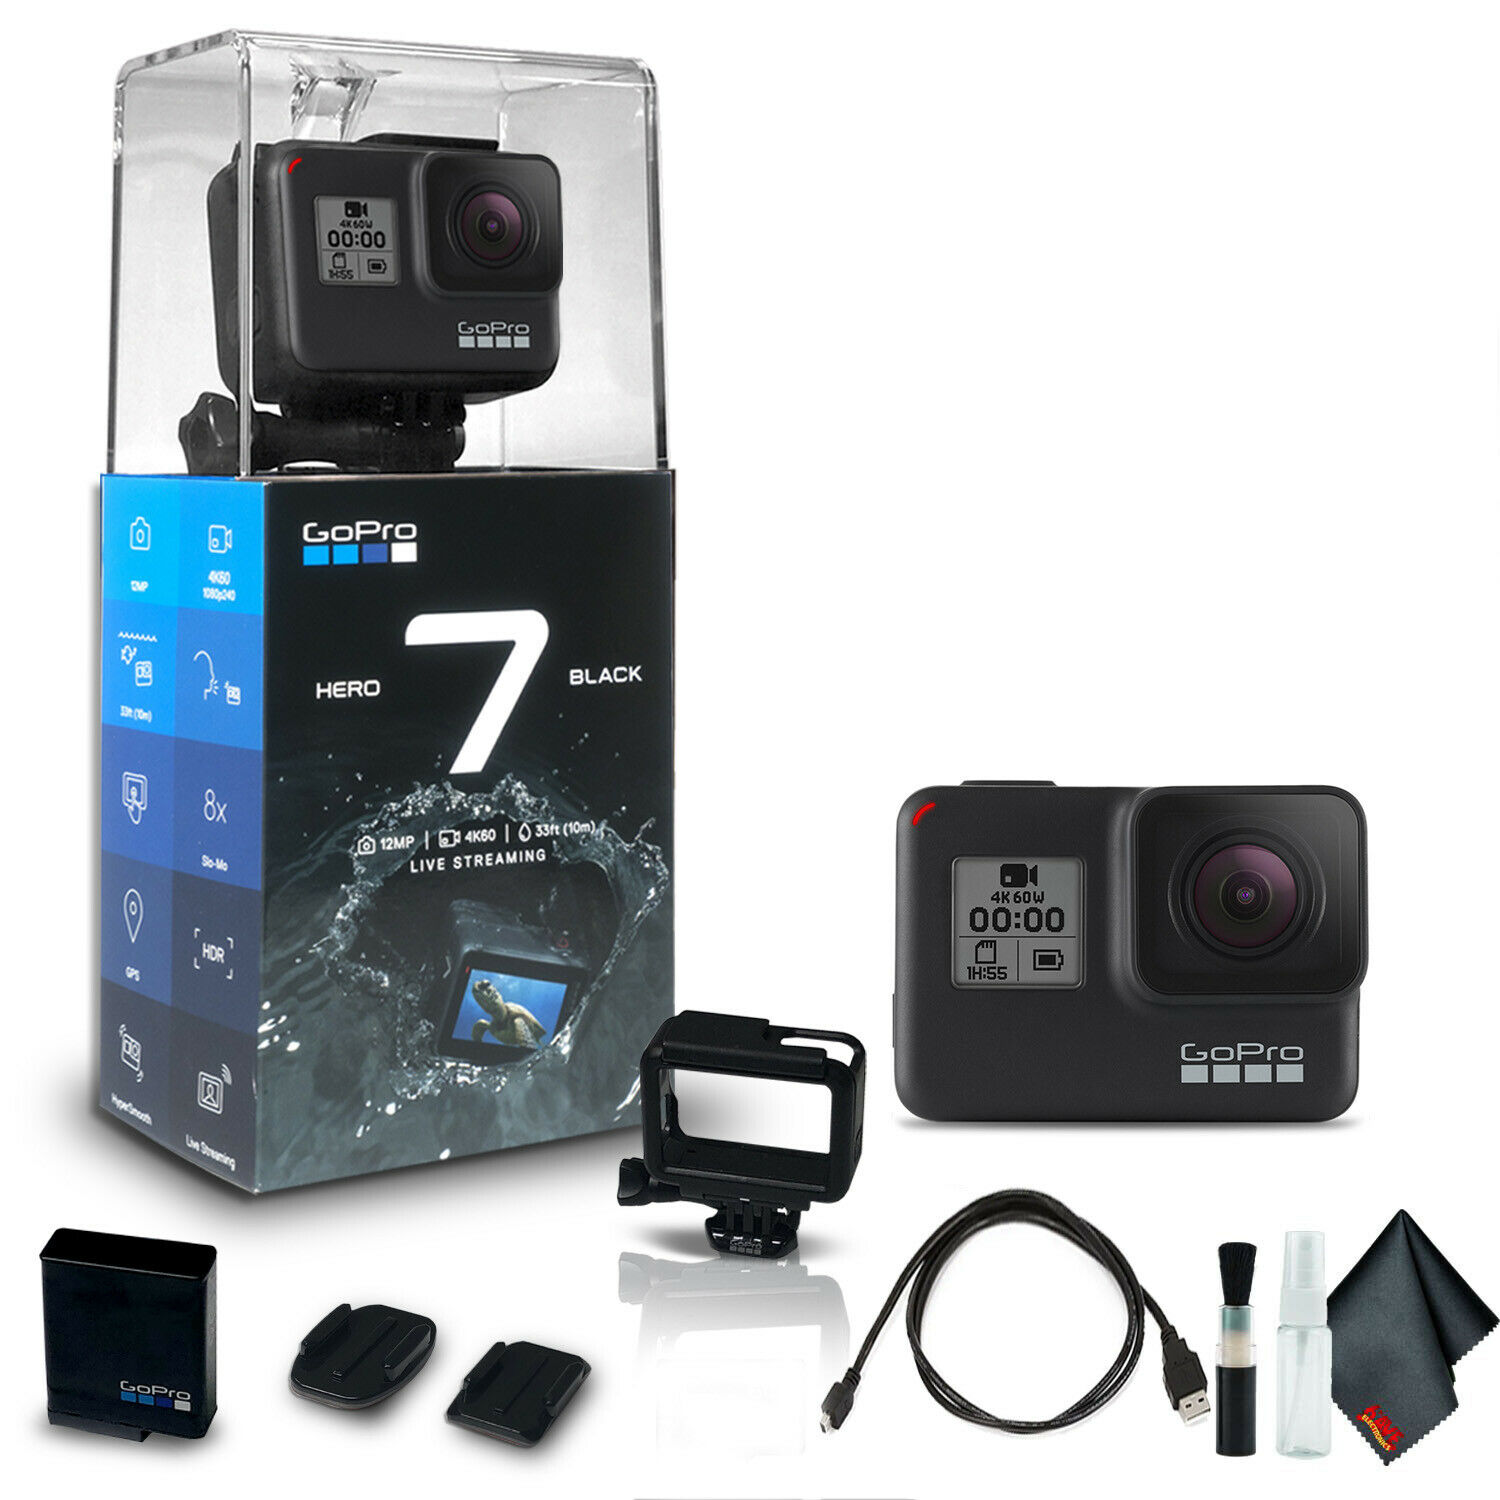 GoPro HERO7 Black - Waterproof Action Camera Base Bundle for sale for